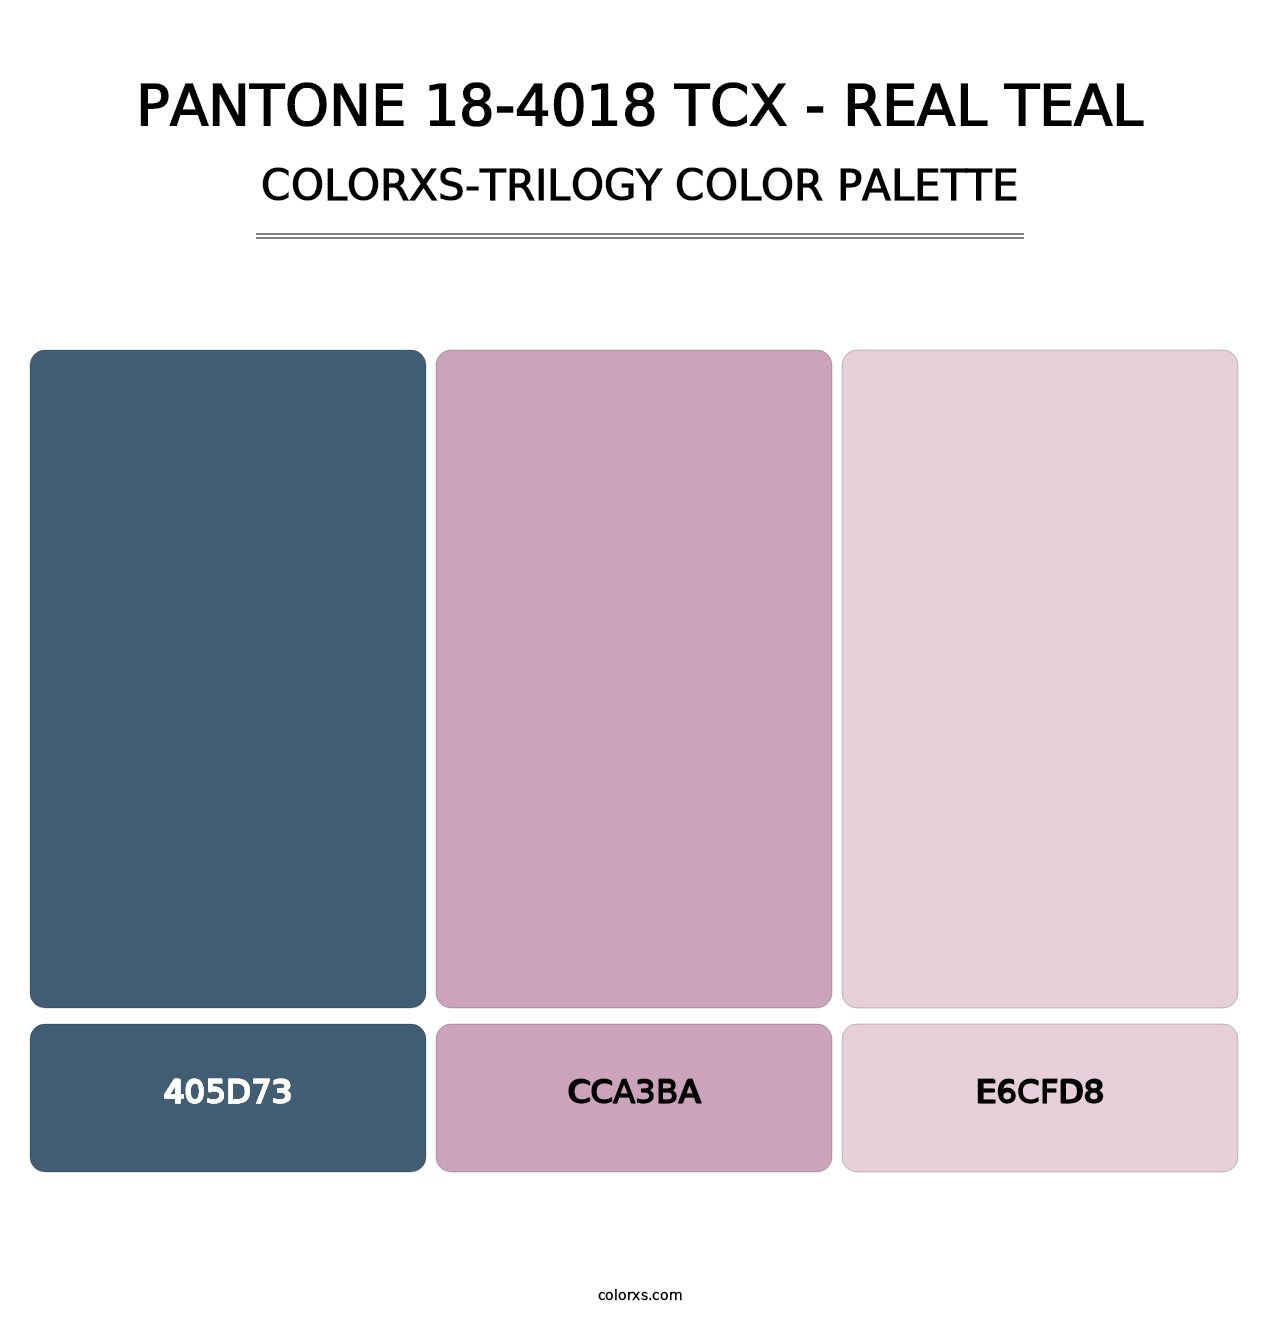 PANTONE 18-4018 TCX - Real Teal - Colorxs Trilogy Palette